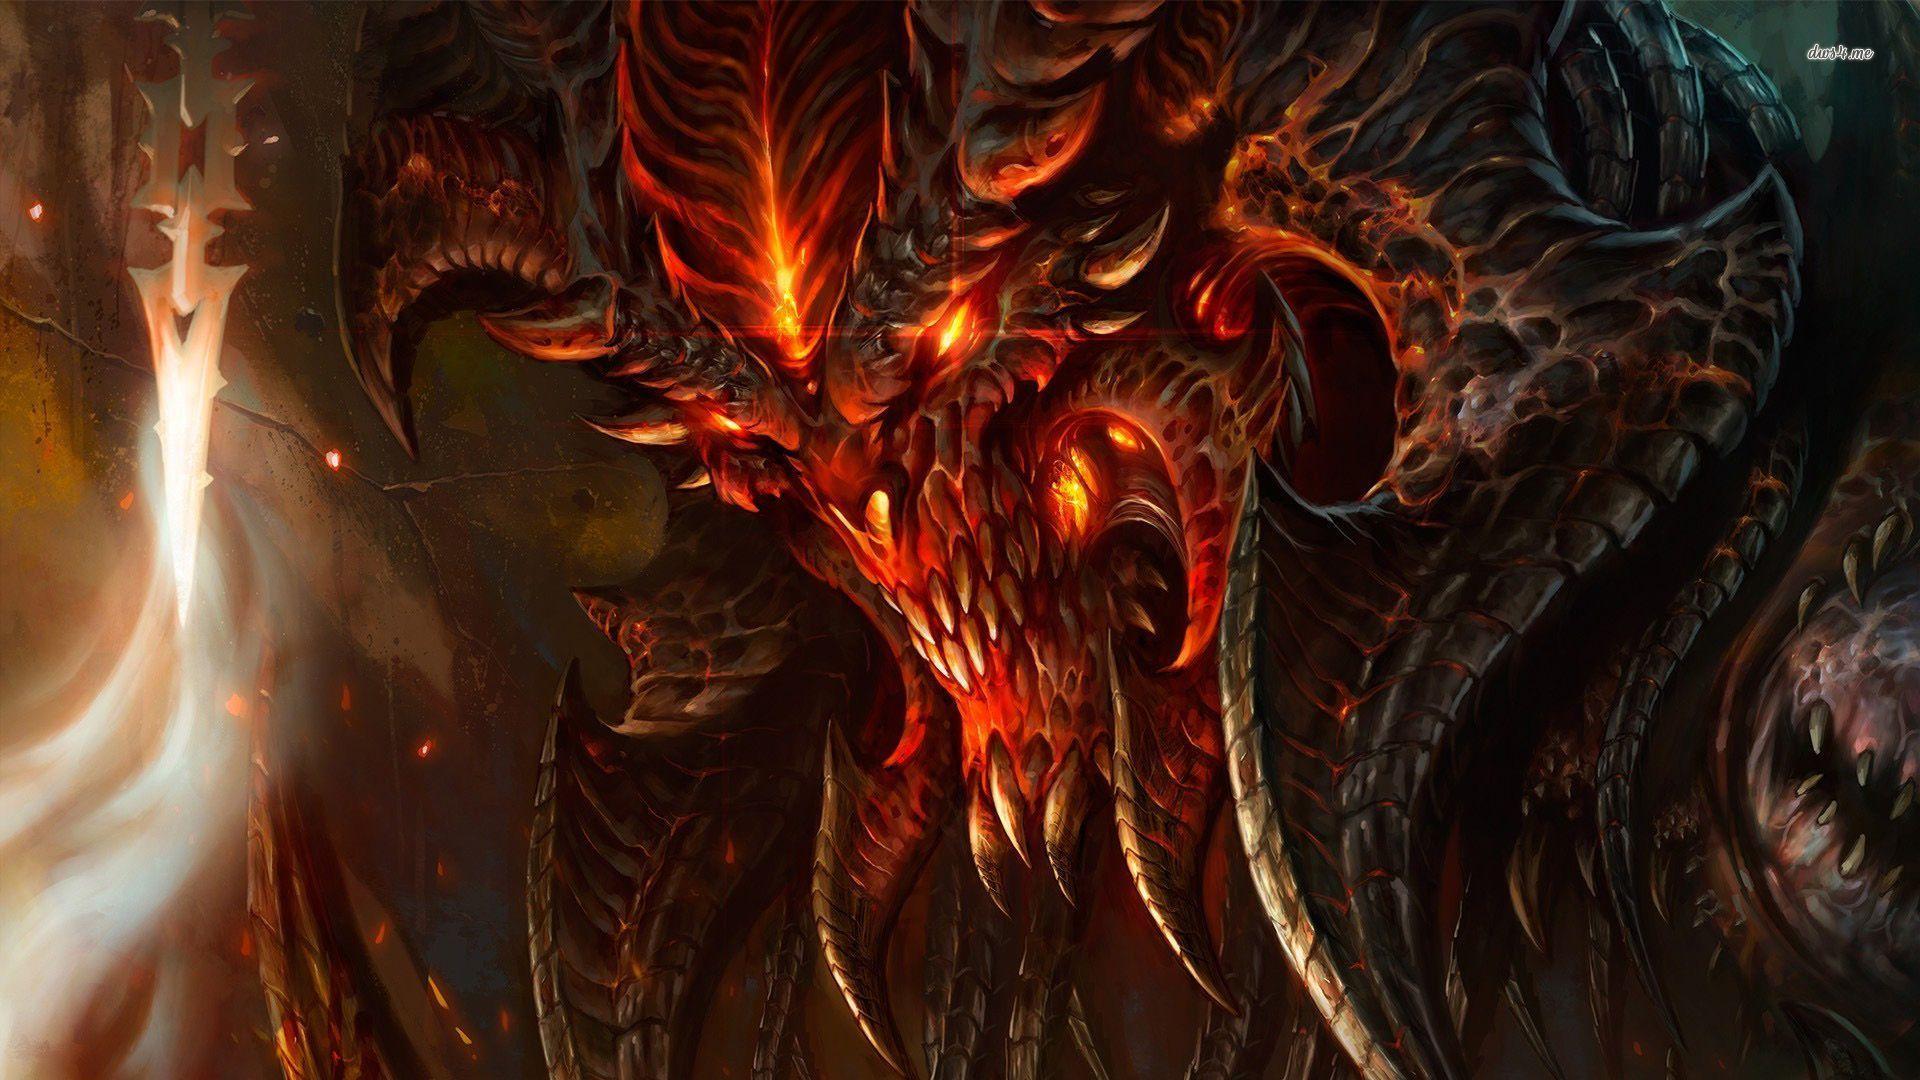 Diablo 3 Wallpaper, 46 PC Diablo 3 Pics in Popular Collection